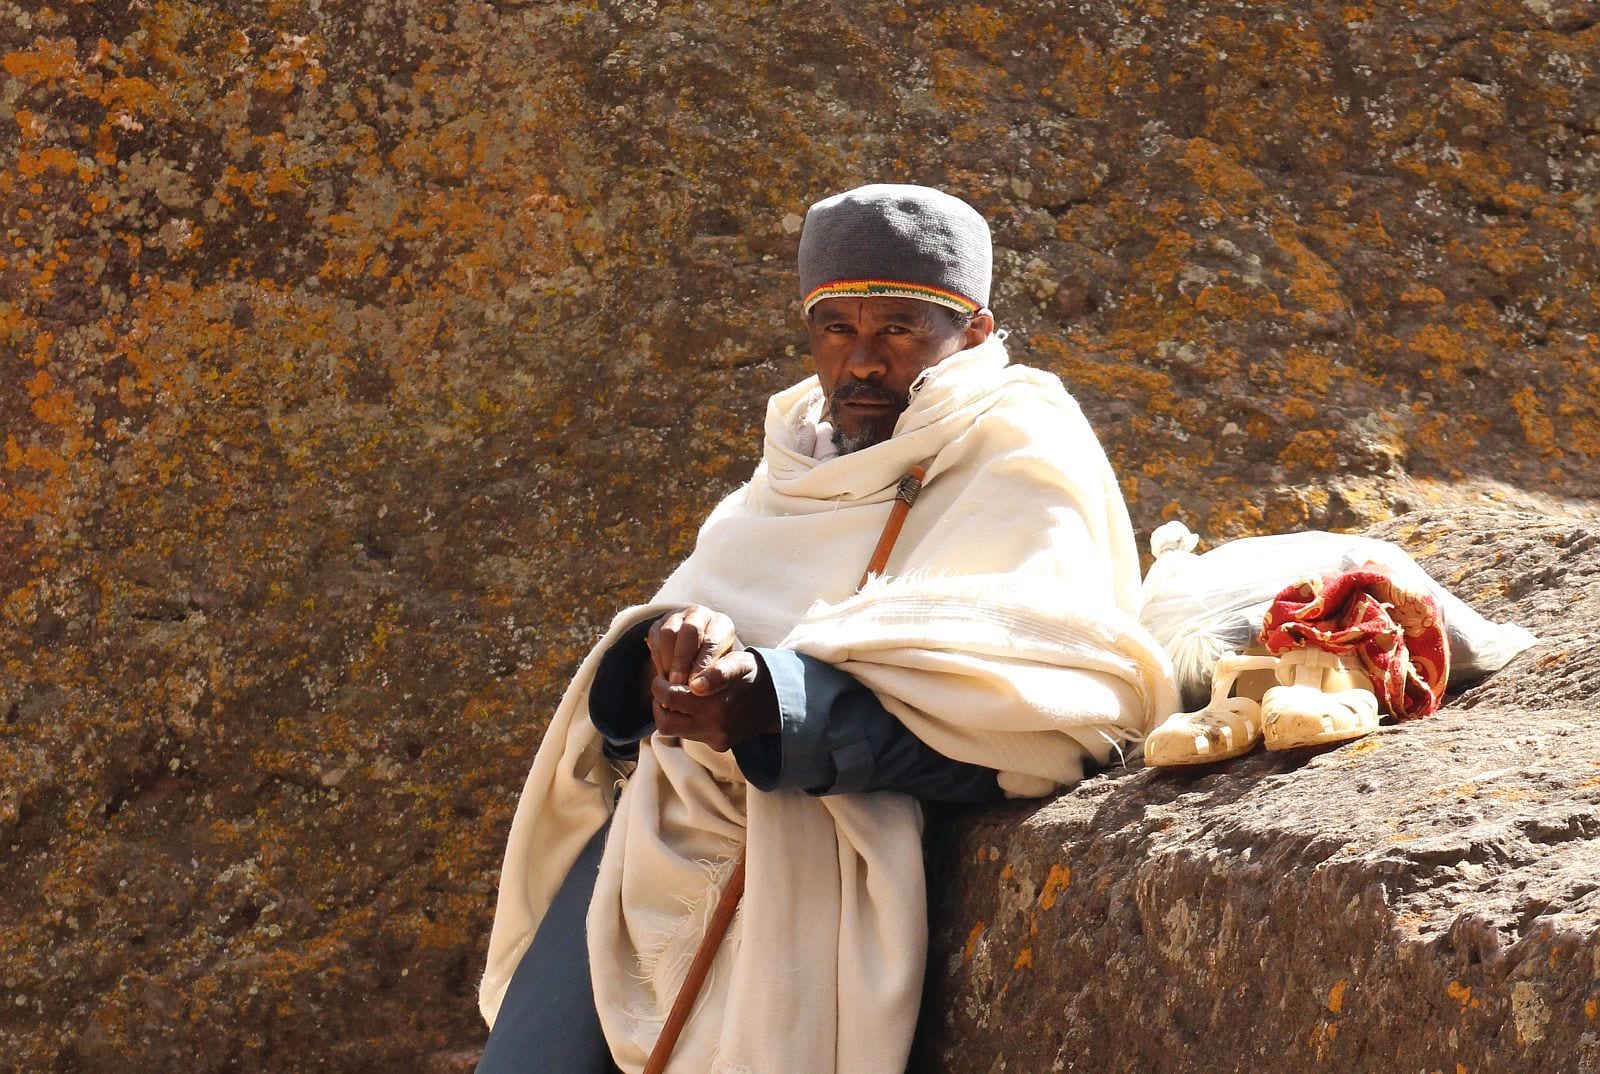 Visit Ethiopia - Kate's recent trip to Lalibela